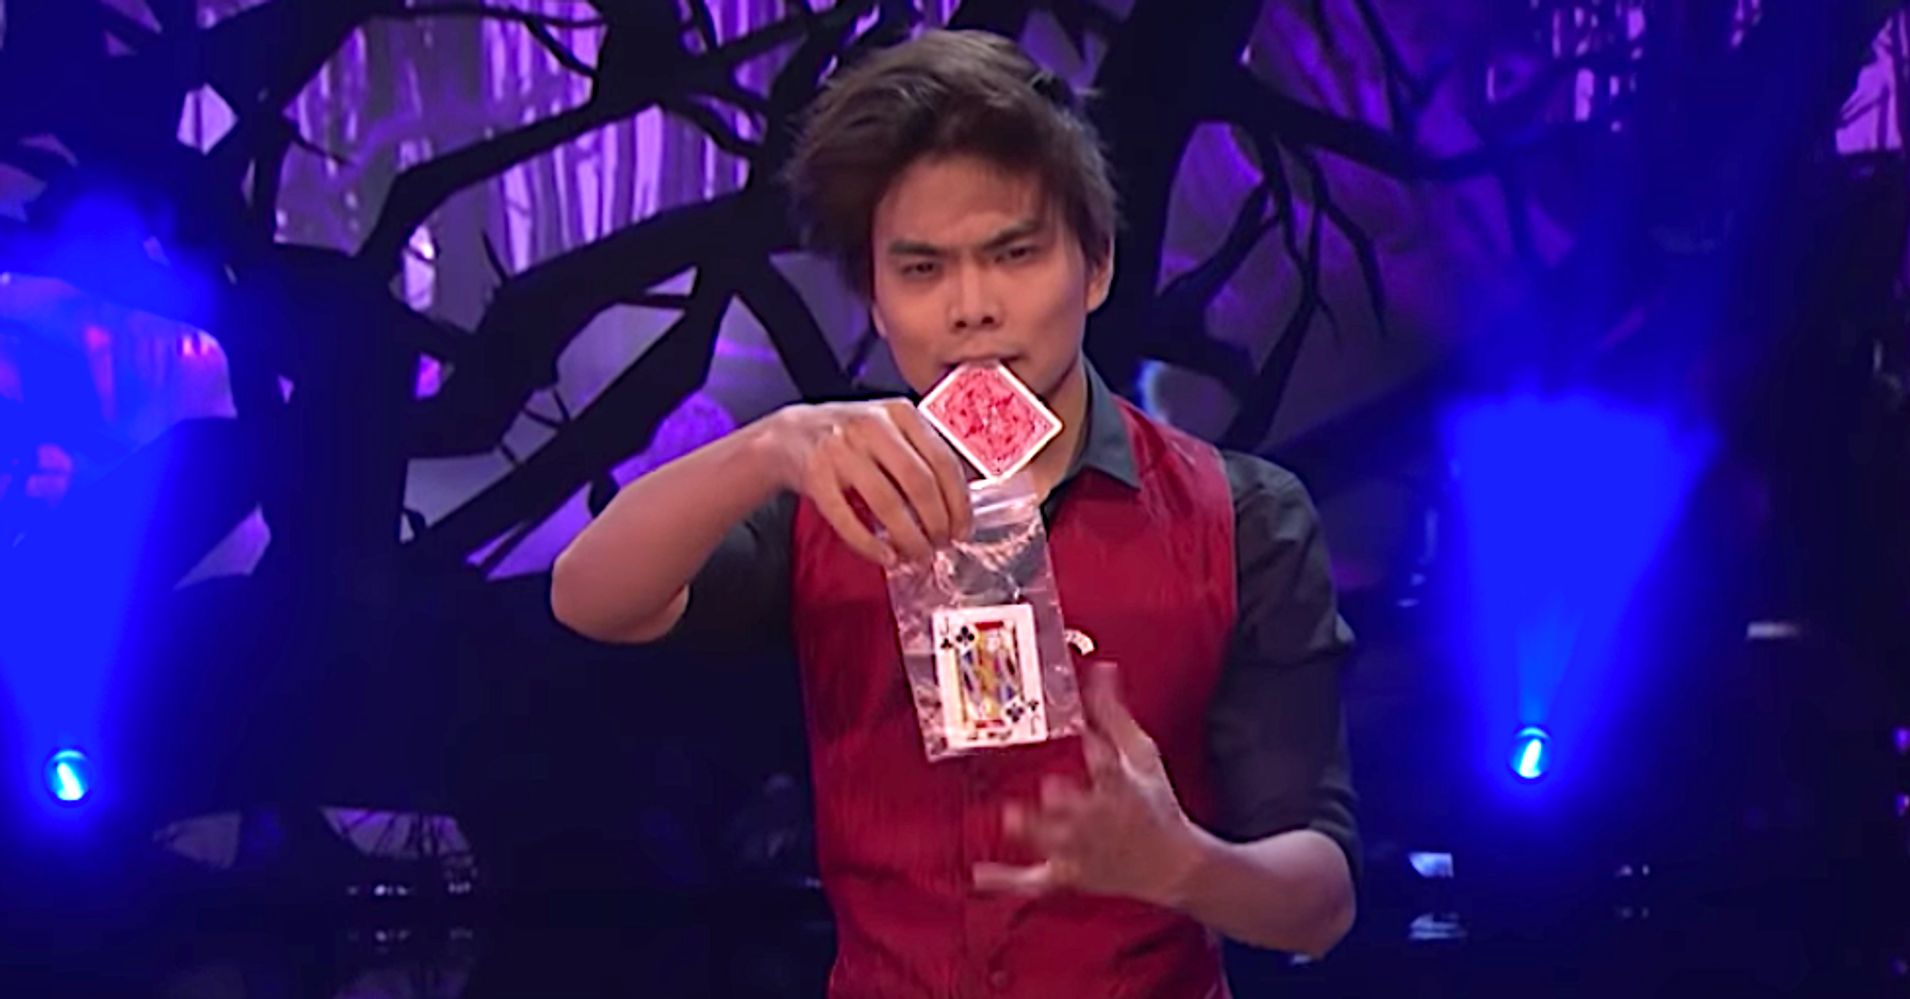 Magician Shin Lim's Card Tricks Amaze On 'America's Got Talent' HuffPost